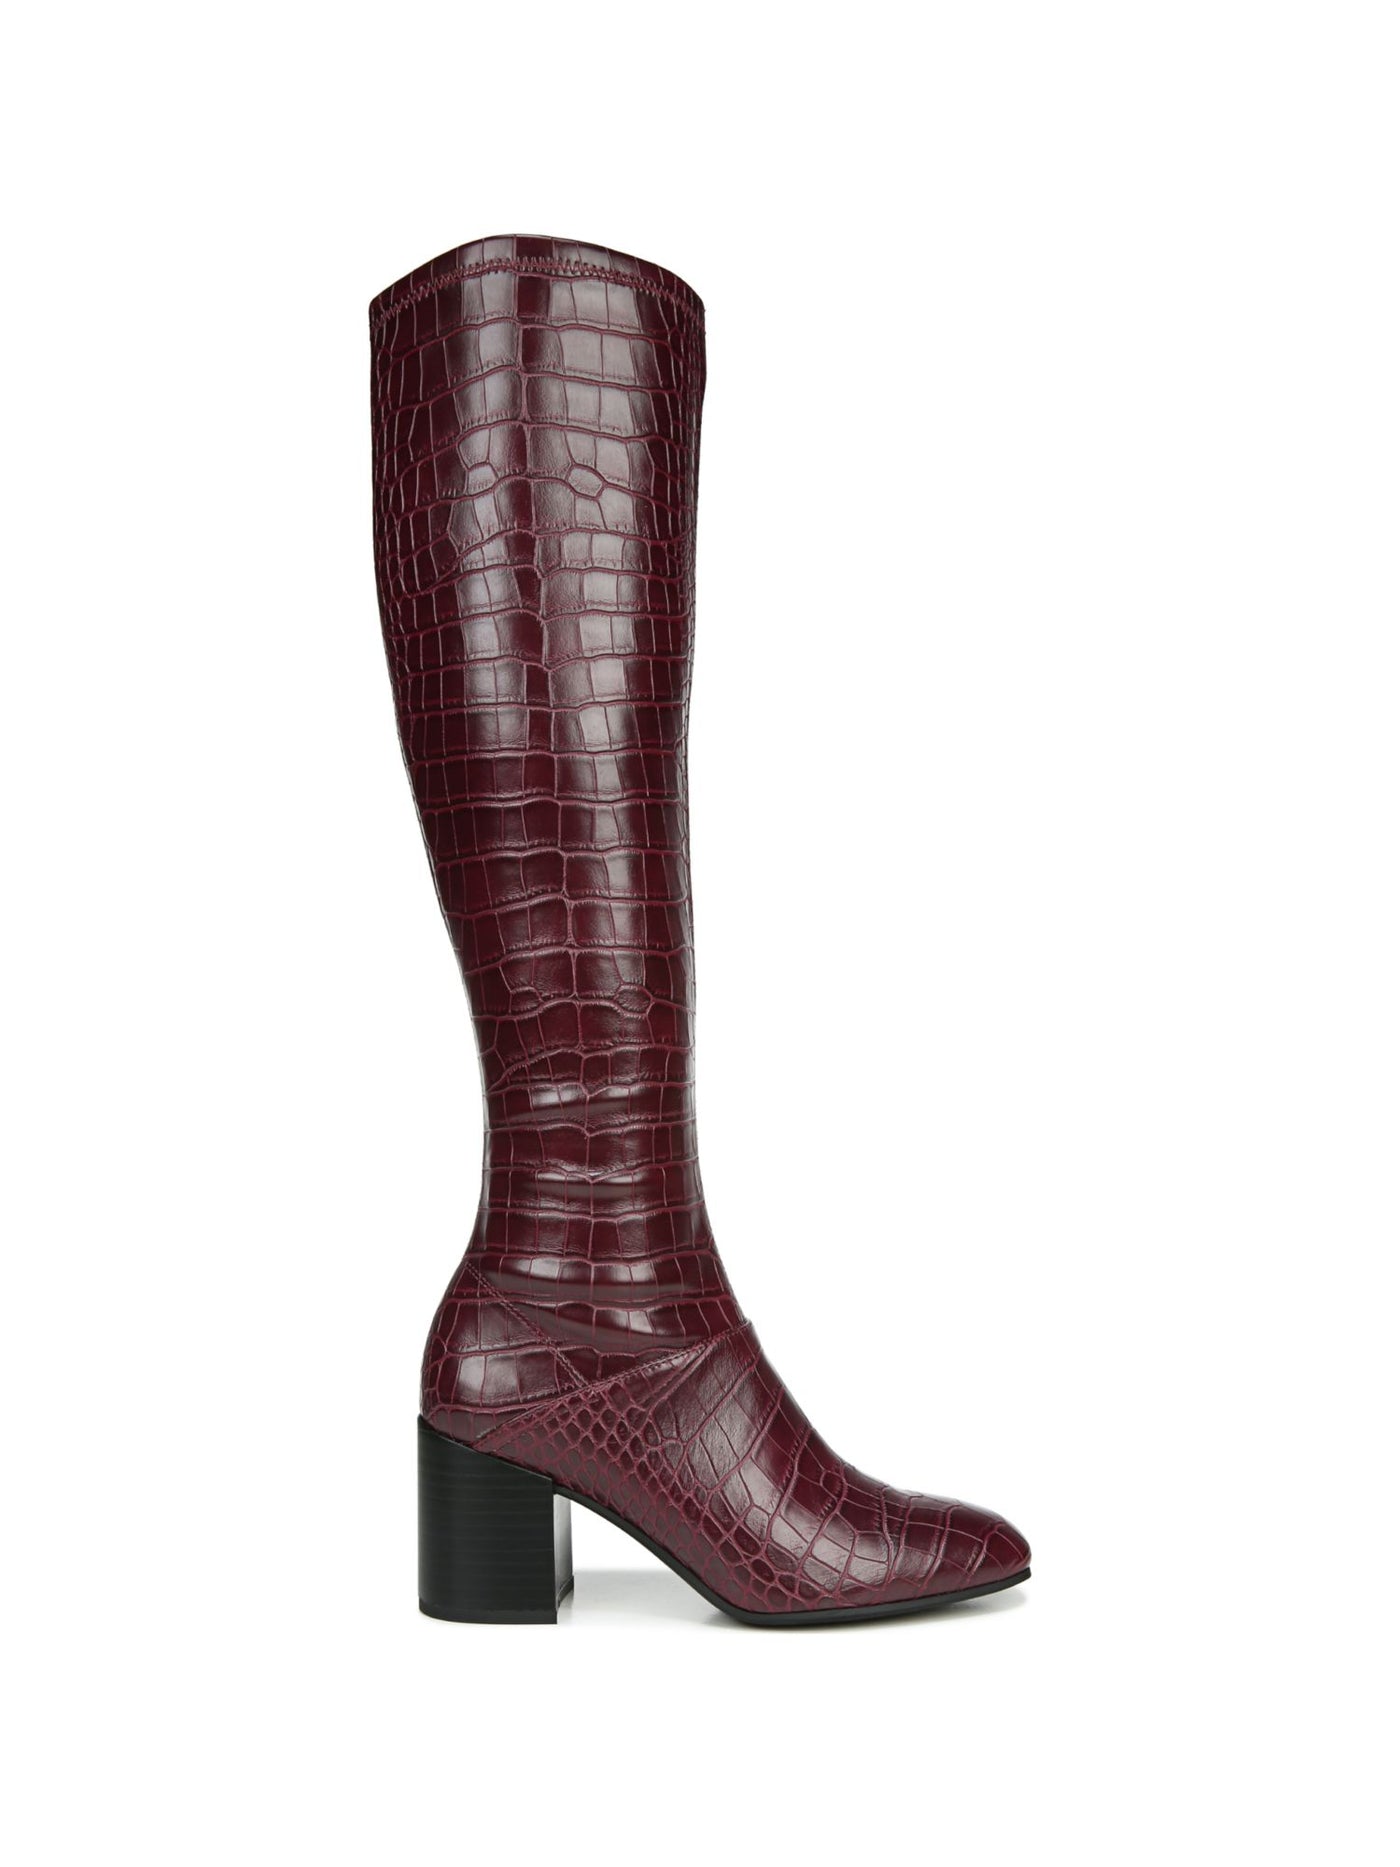 FRANCO SARTO Womens Burgundy Crocodile Cushioned Tribute Square Toe Block Heel Zip-Up Dress Boots 6 M